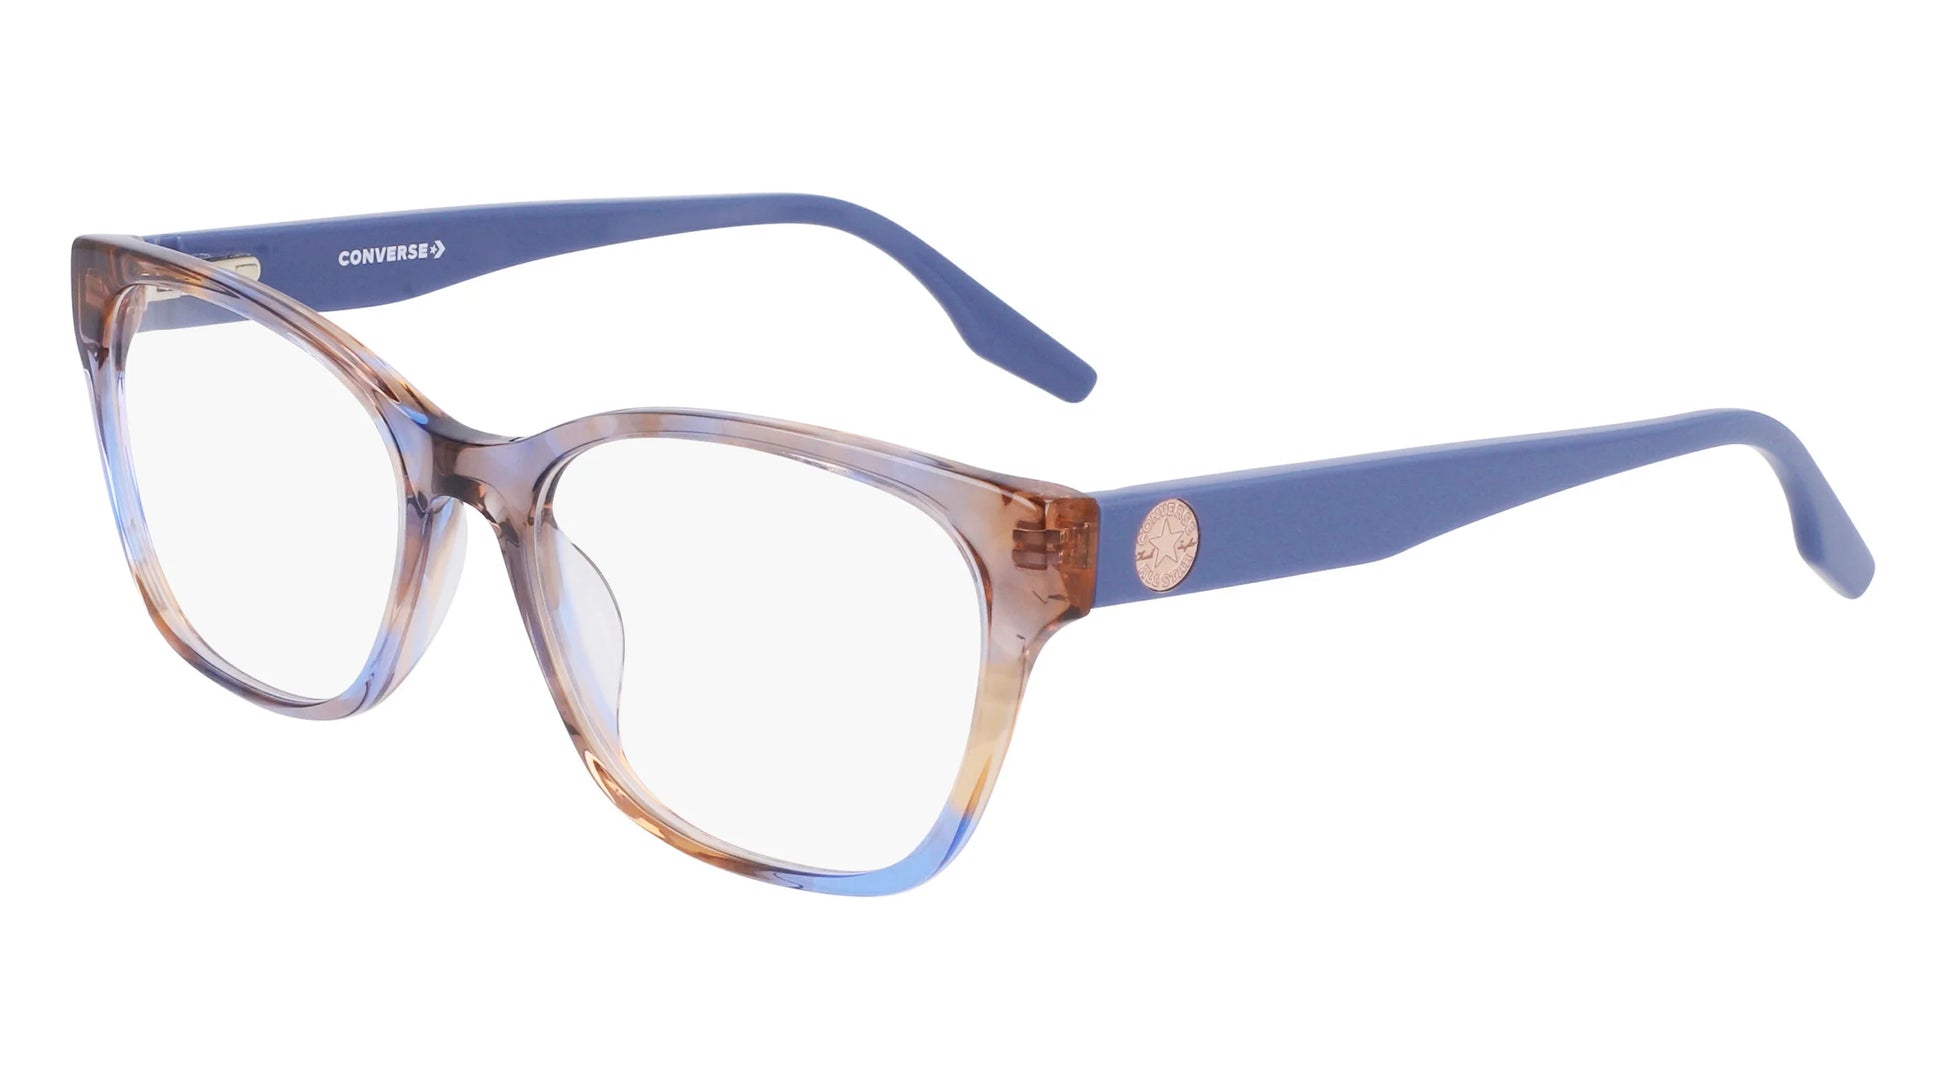 Converse CV5064 Eyeglasses Lilac Tortoise